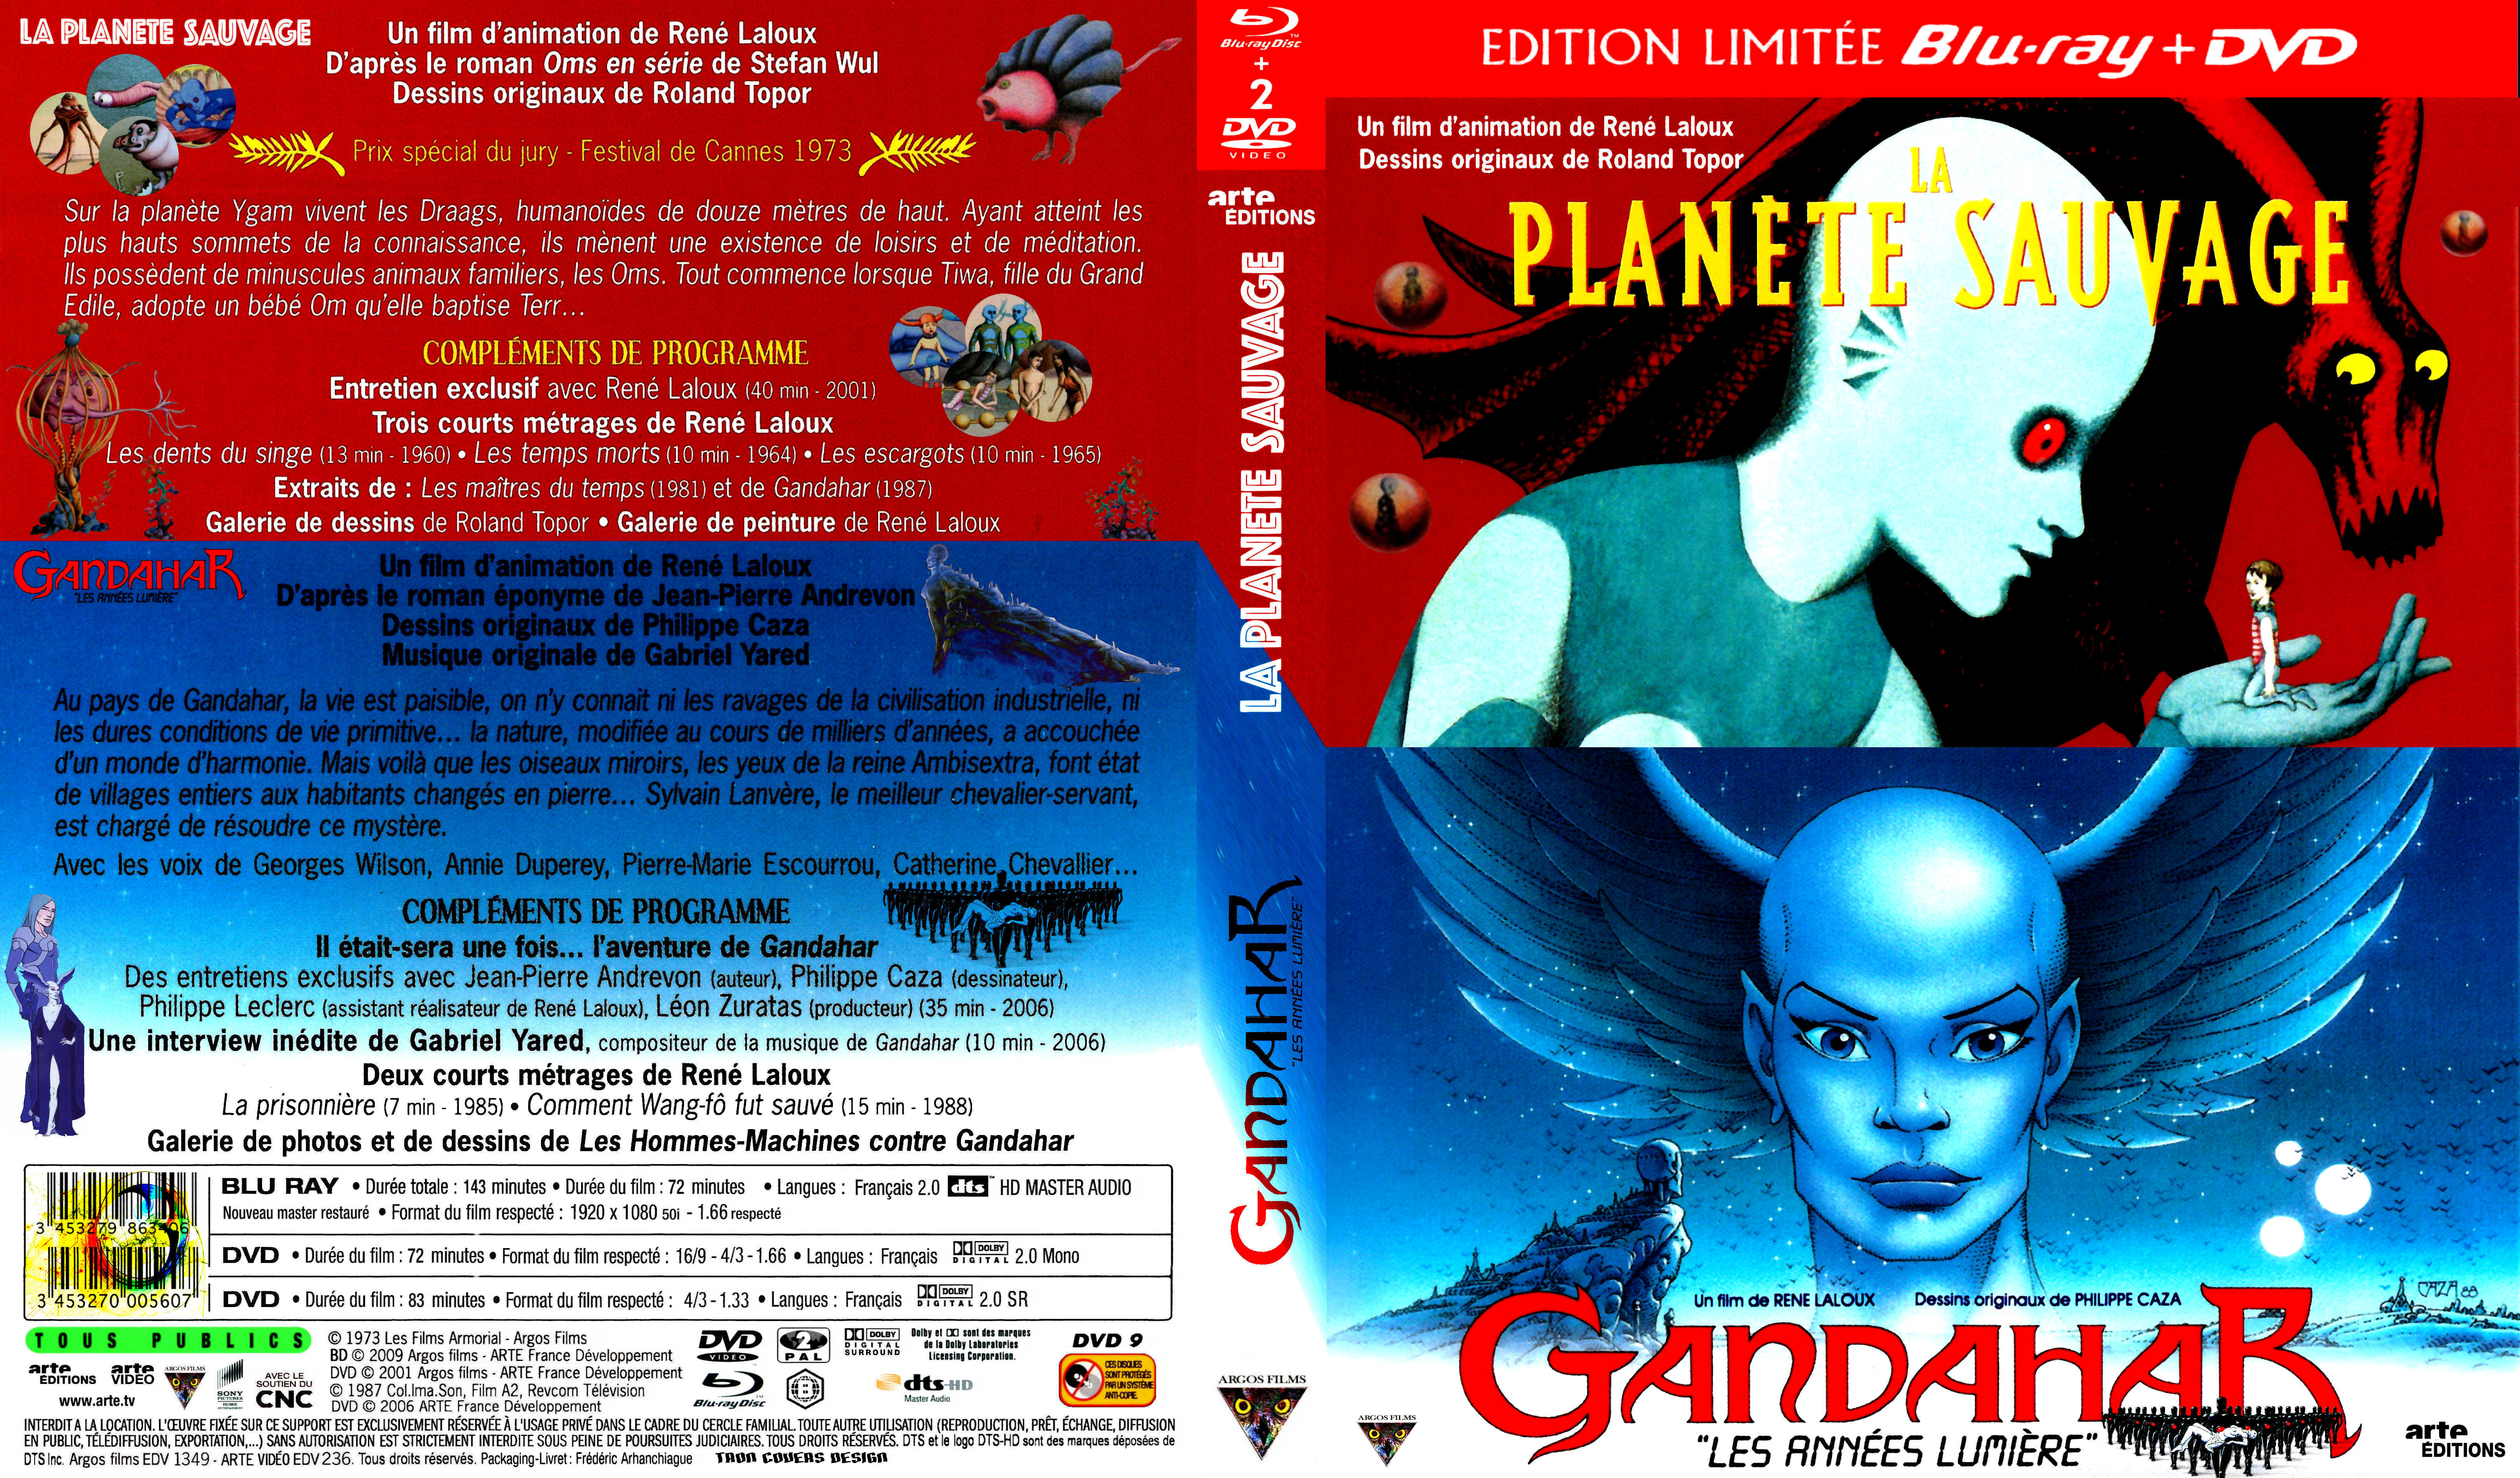 Jaquette DVD La planete sauvage et gandahar custom (BLU-RAY) 